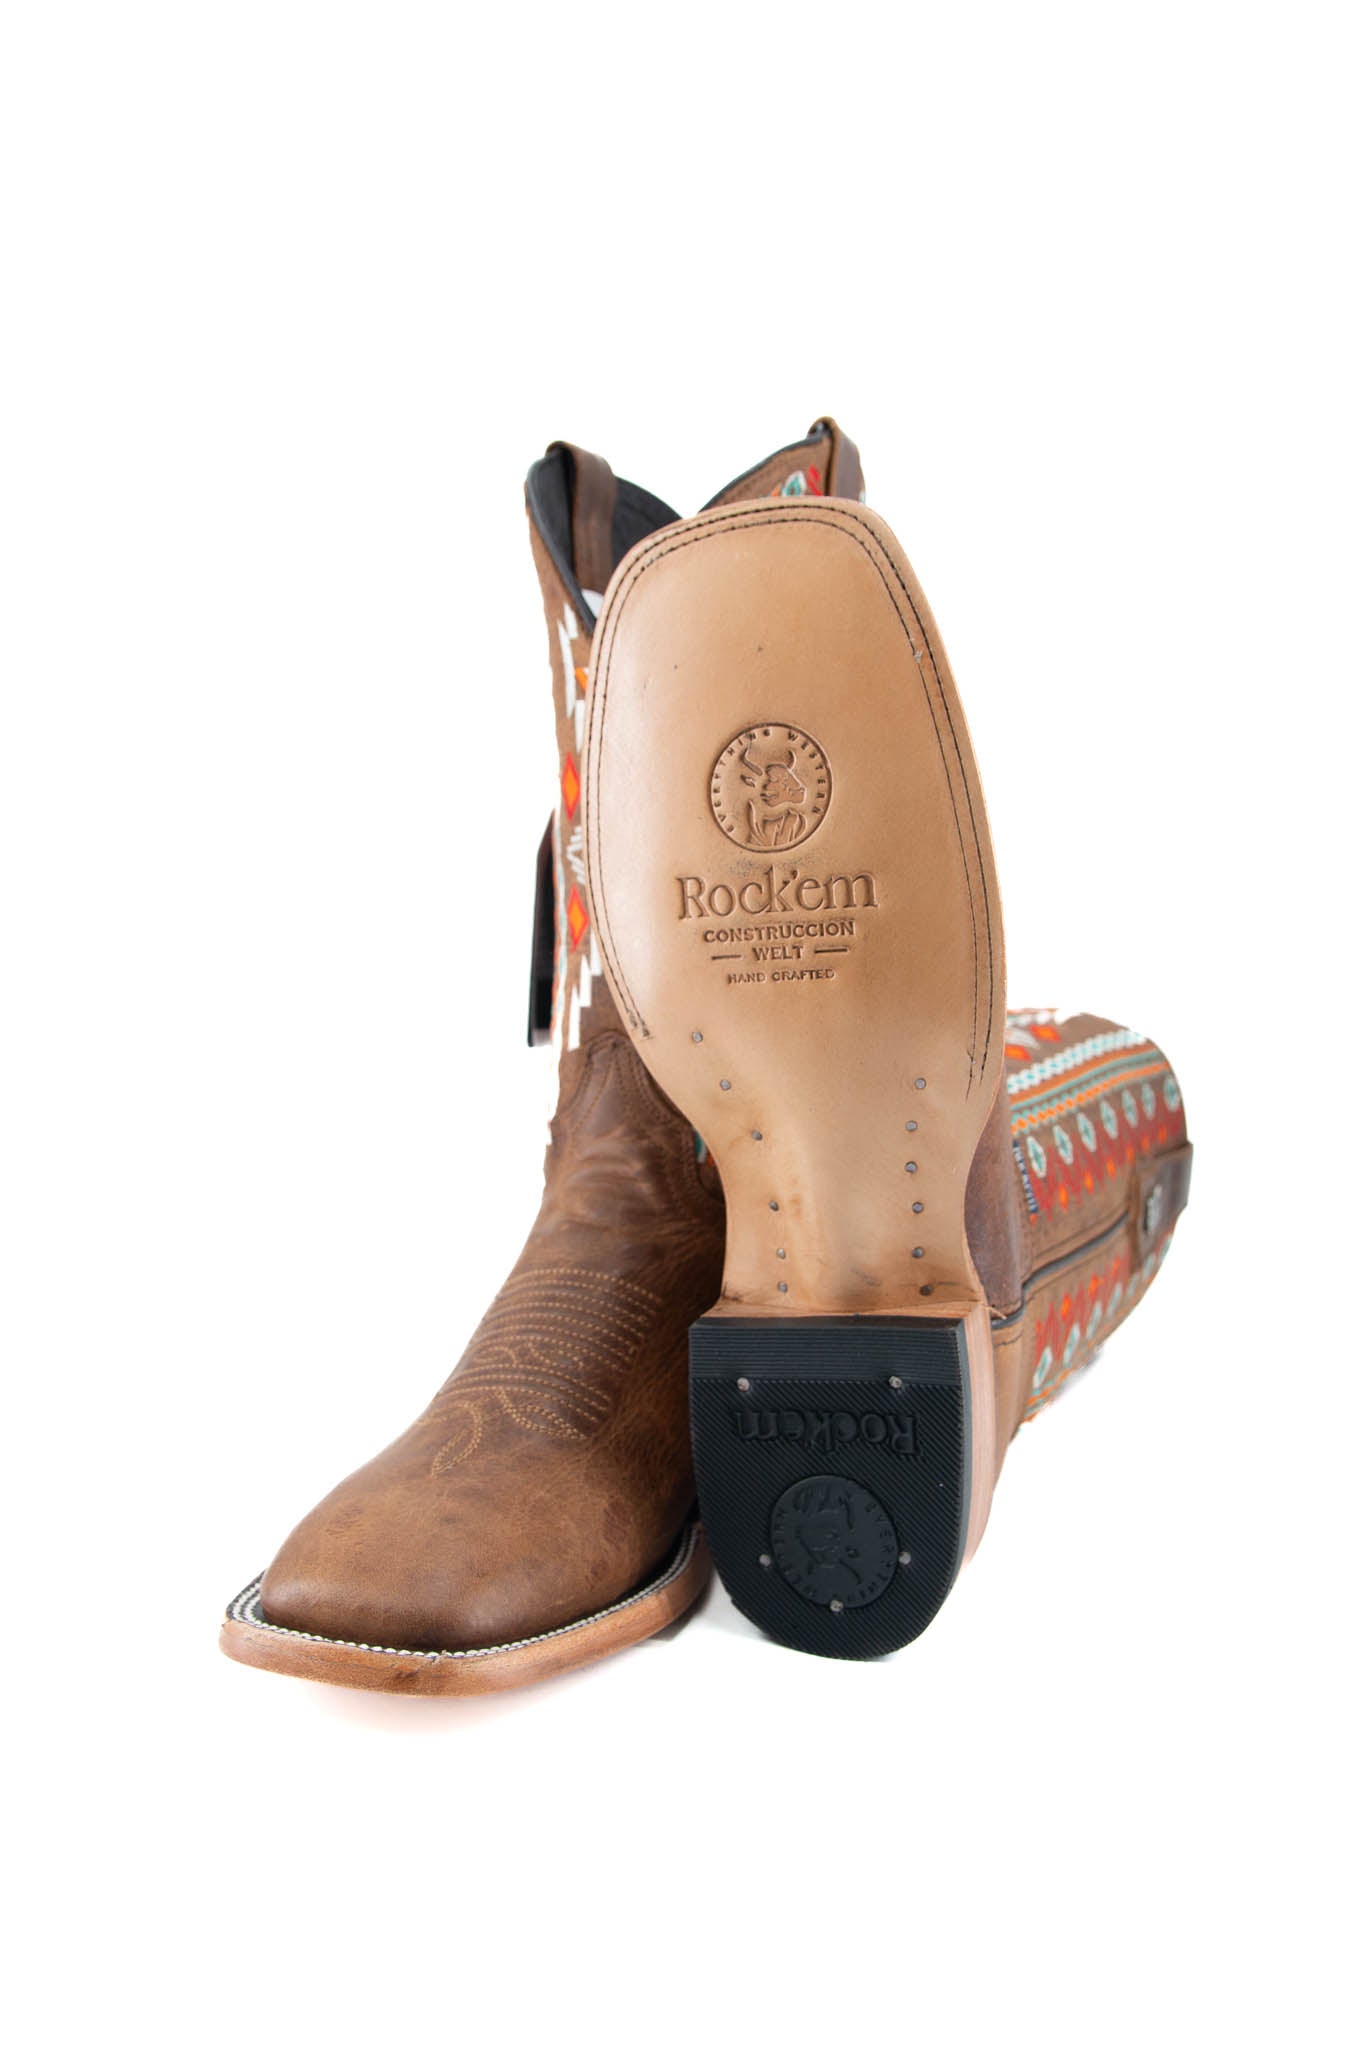 Est. Huichol Aztec Square Toe Cowboy Boots